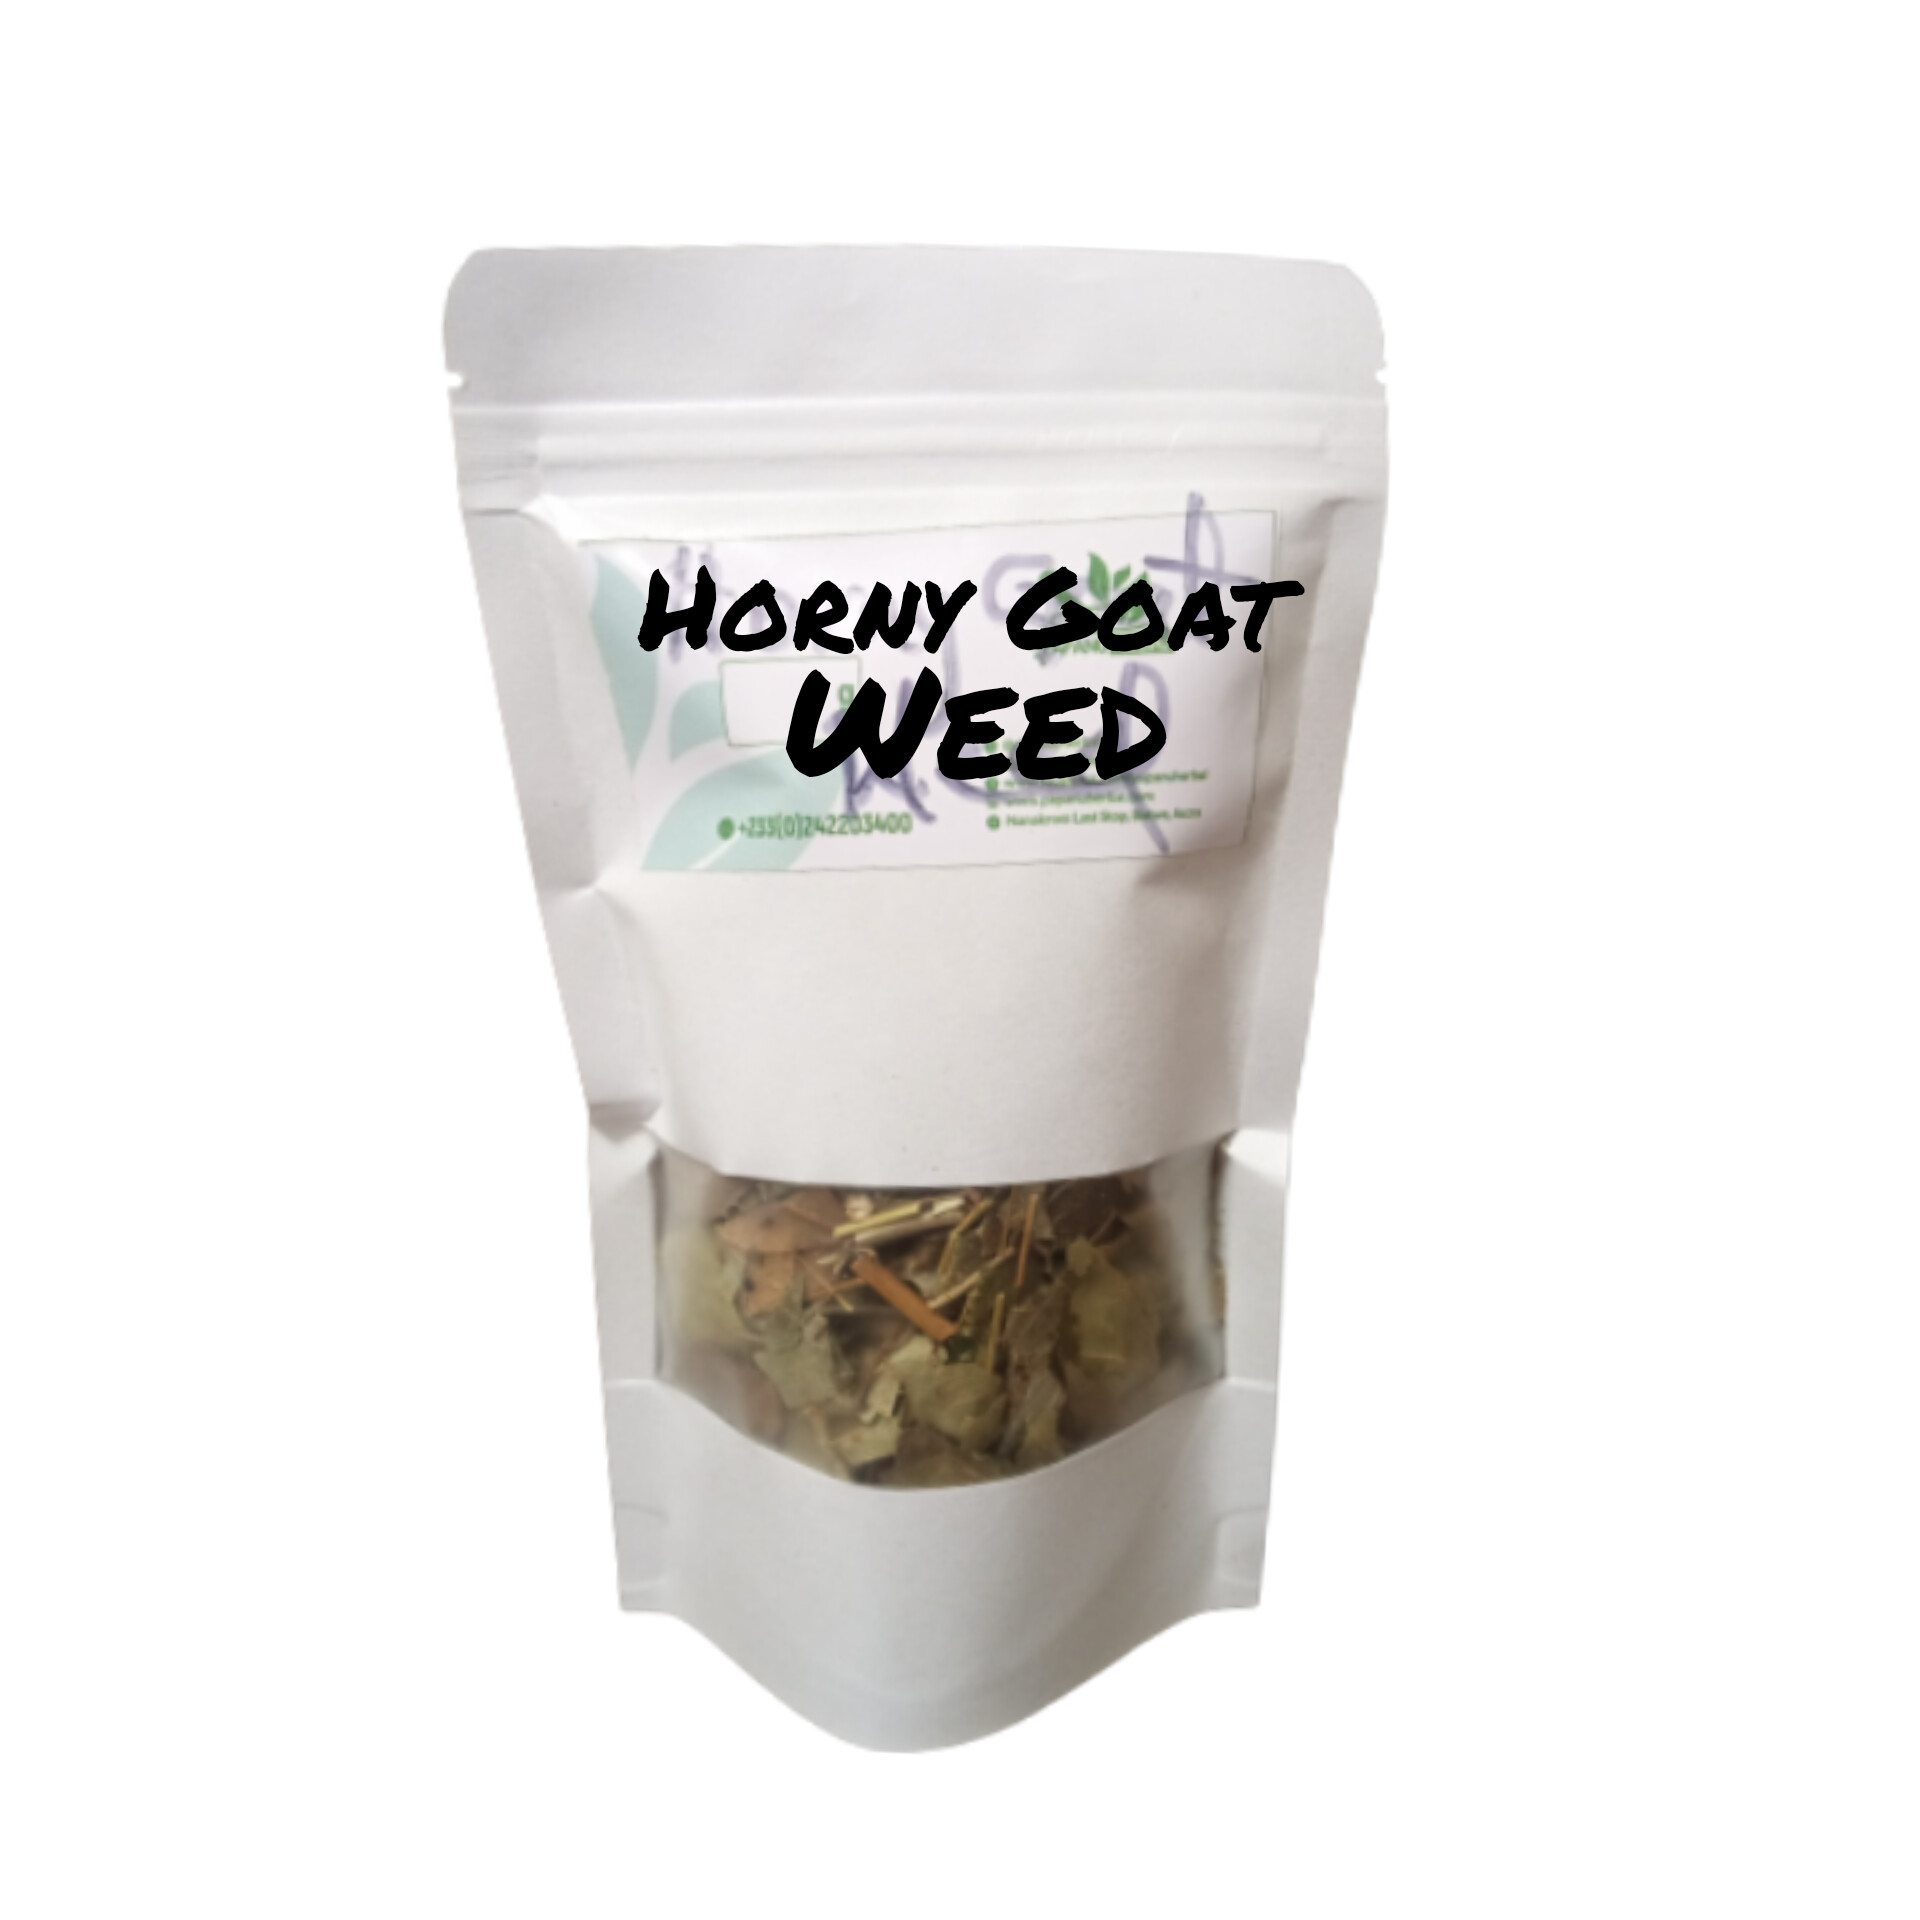 Papanu Horny Goat Weed Pack